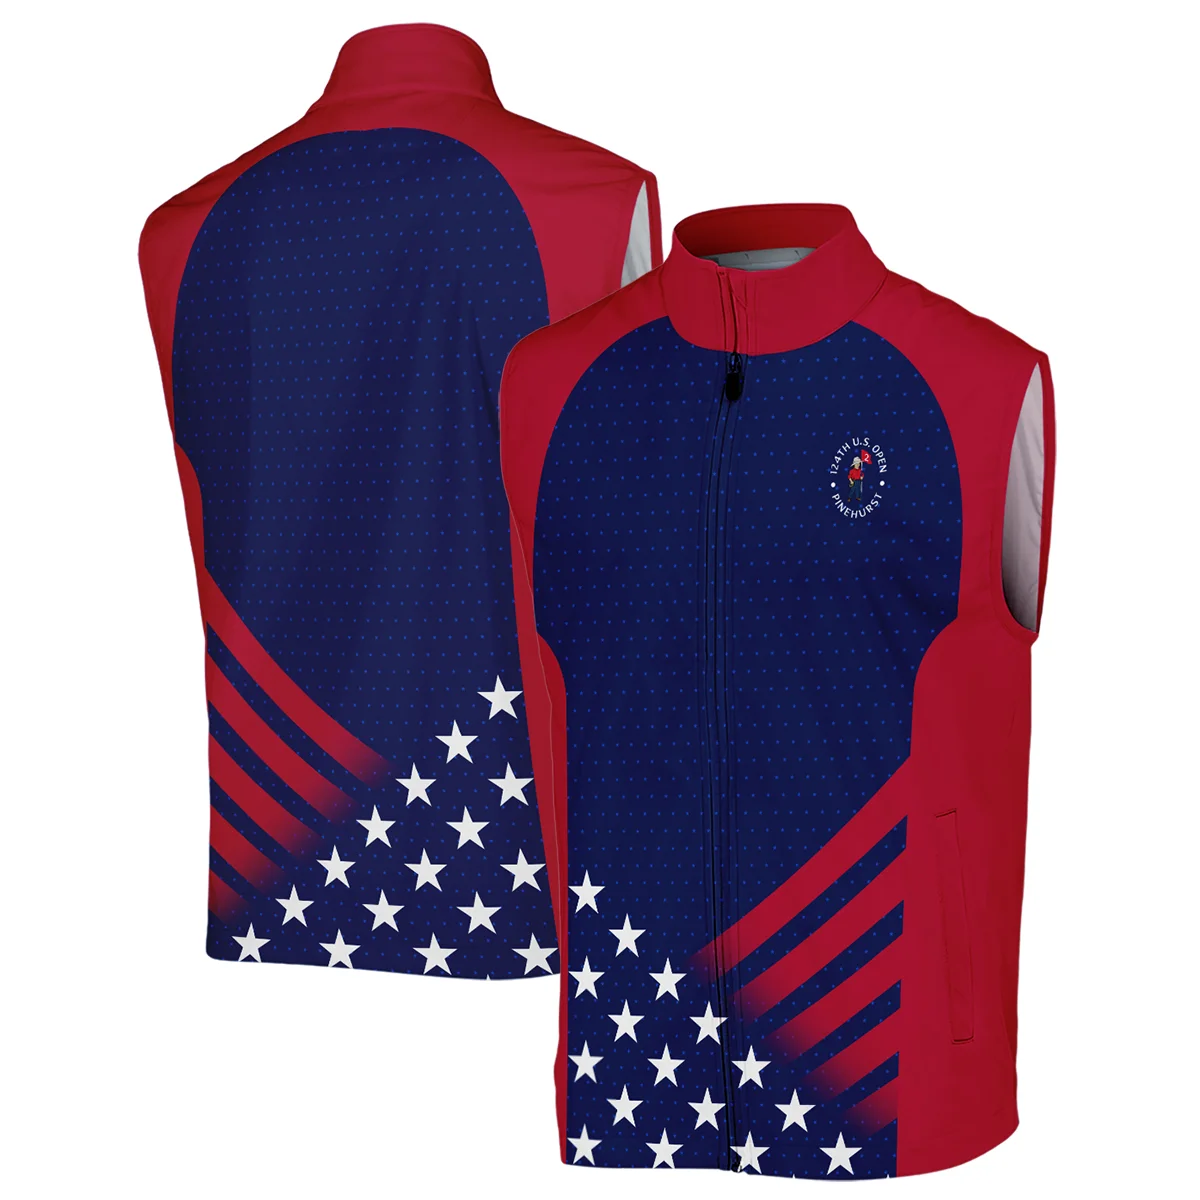 Callaway 124th U.S. Open Pinehurst Star White Dark Blue Red Background Unisex T-Shirt Style Classic T-Shirt